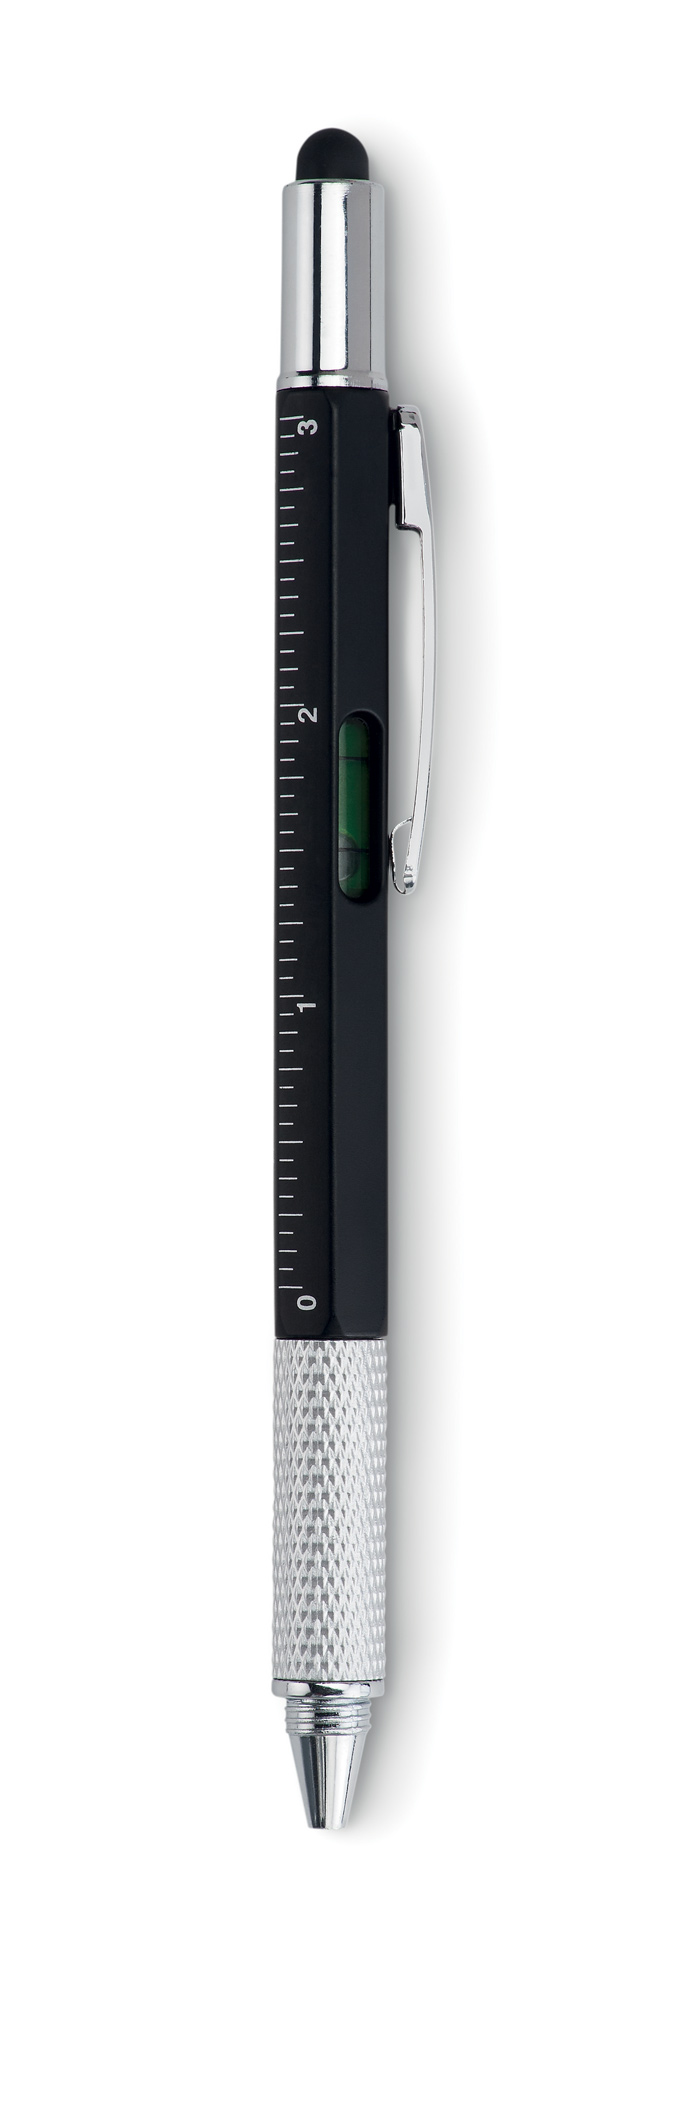 Promotional Spirit level pen with ruler